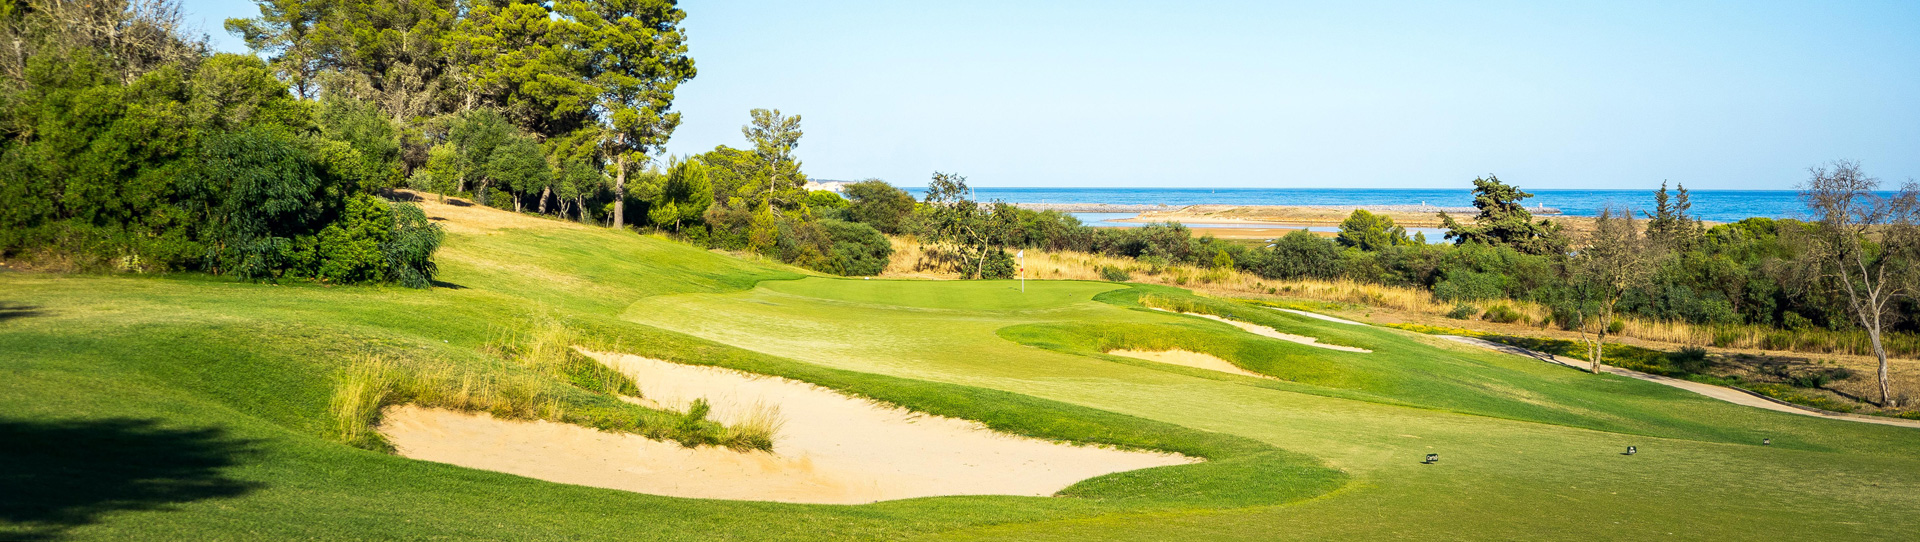 Portugal golf holidays - Palmares Trio Experience - Photo 1